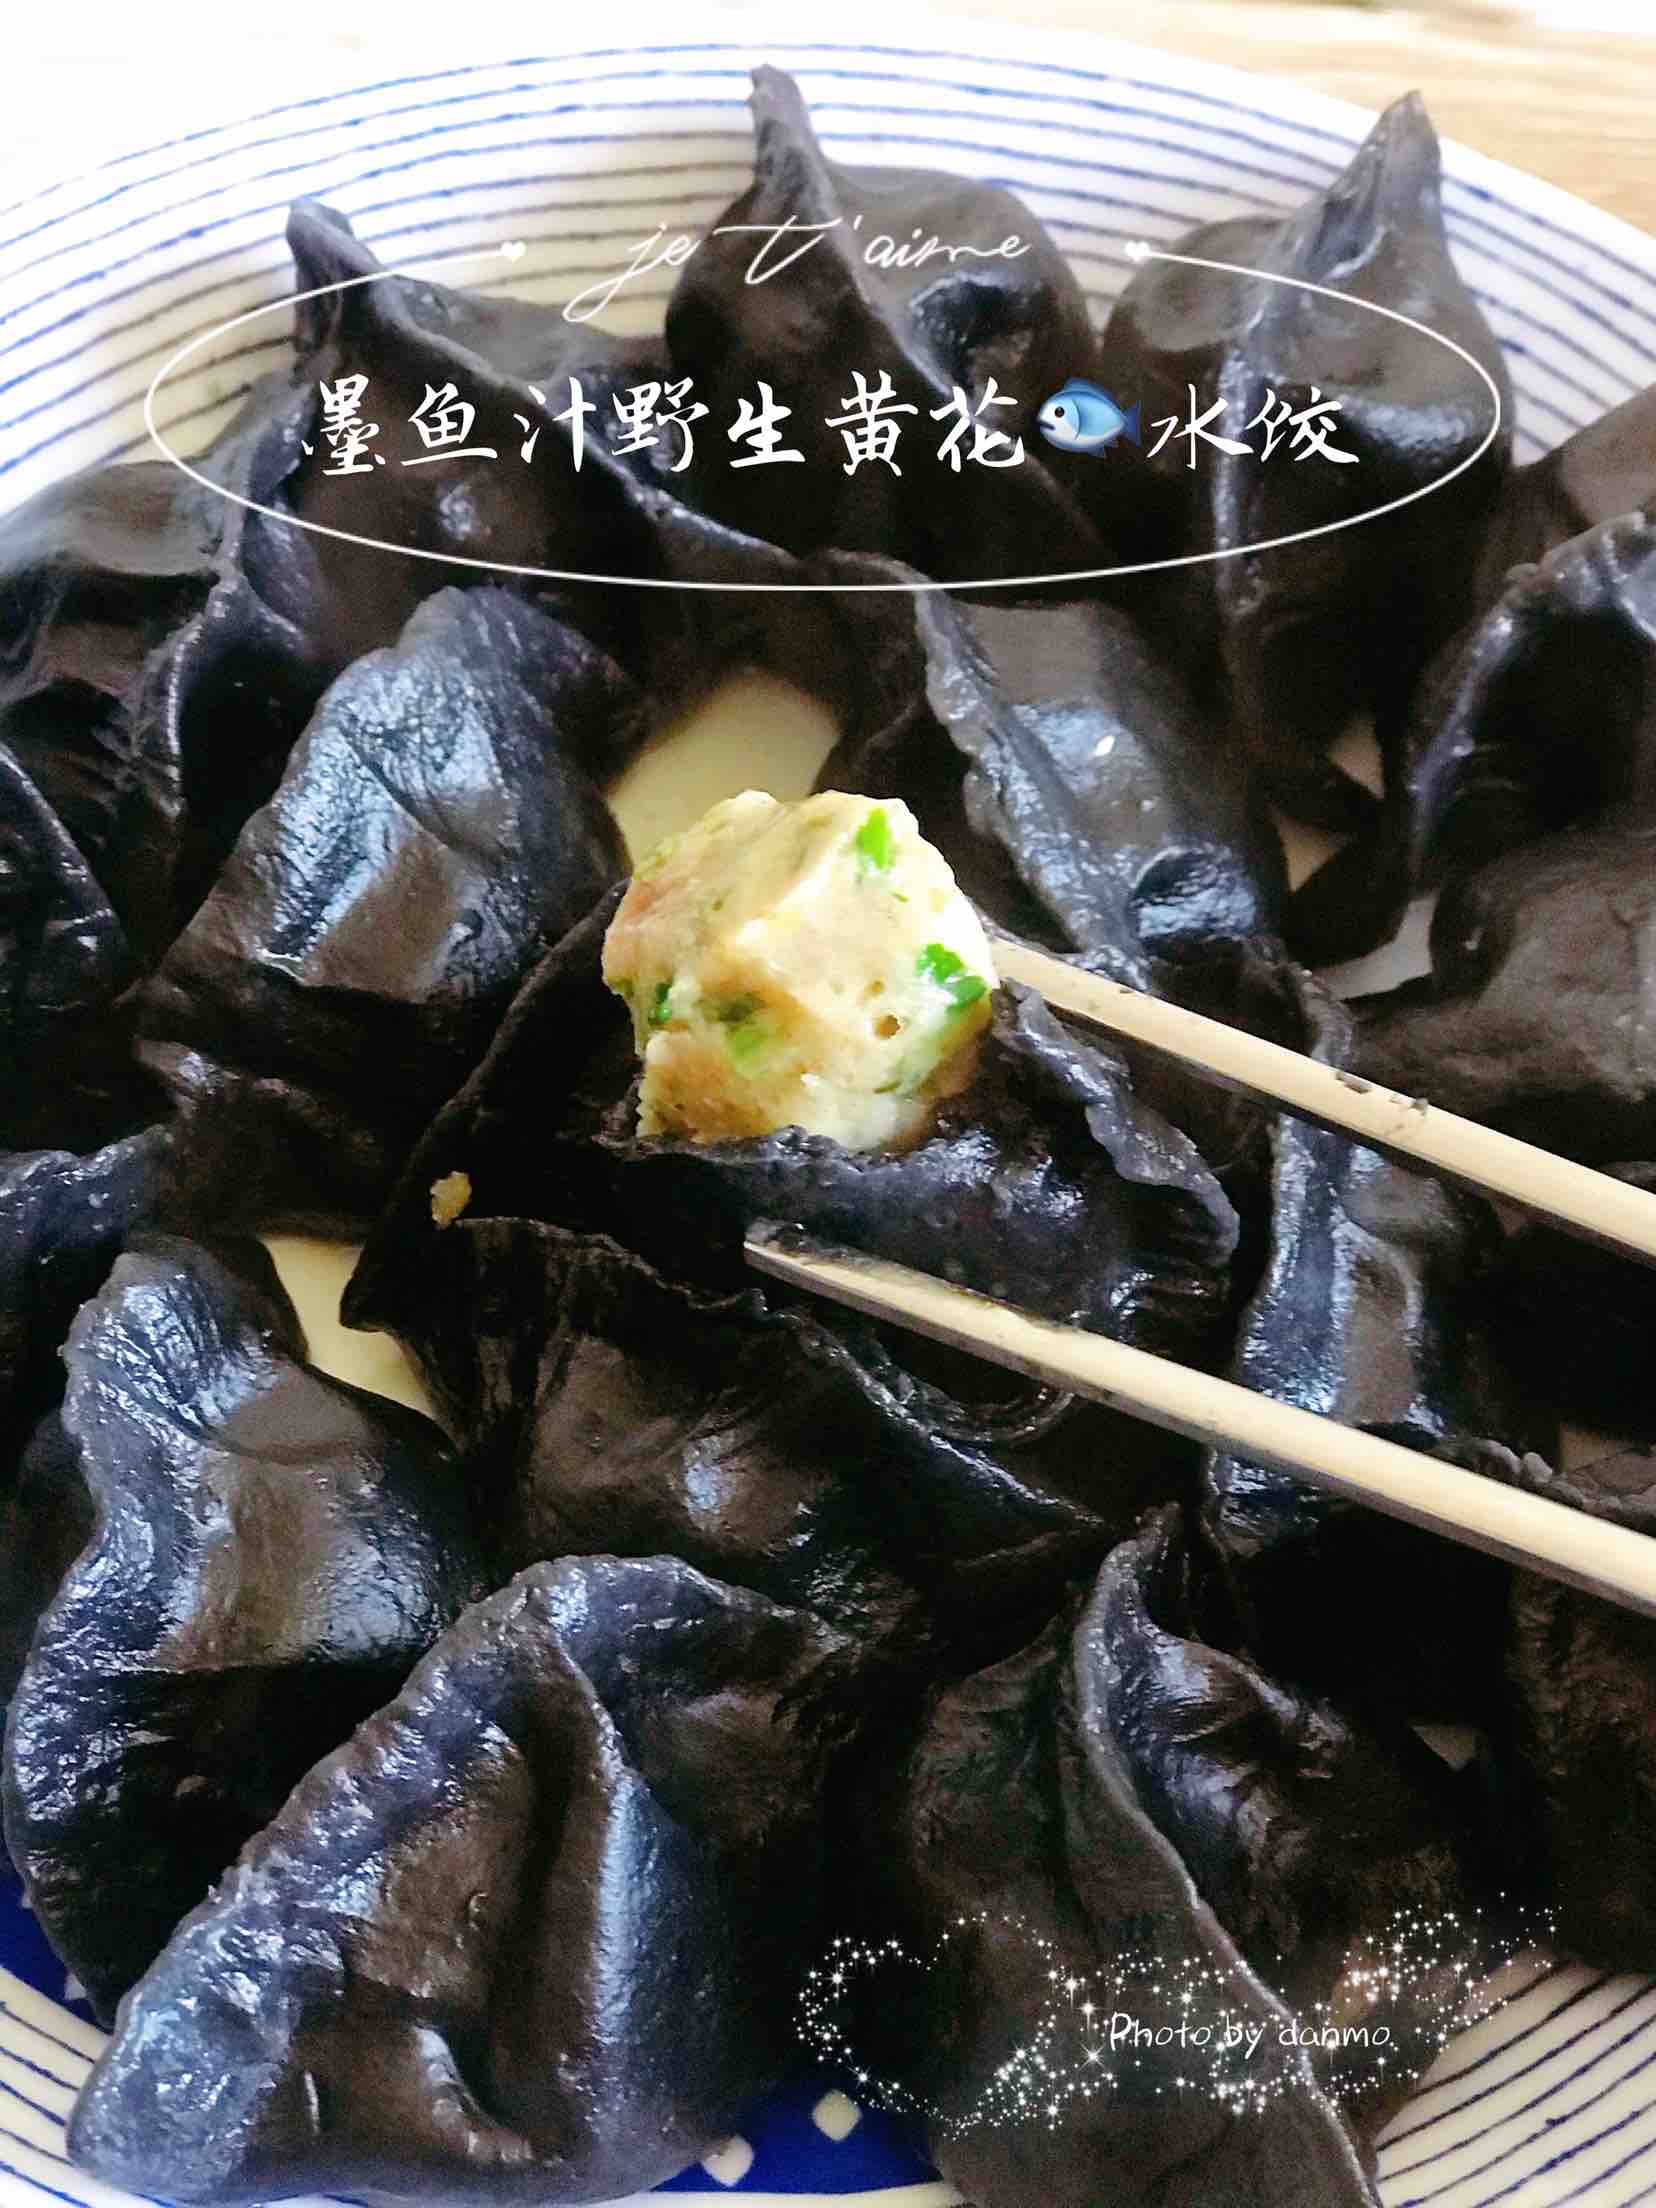 Wild Yellow Croaker Dumplings with Cuttlefish Sauce recipe